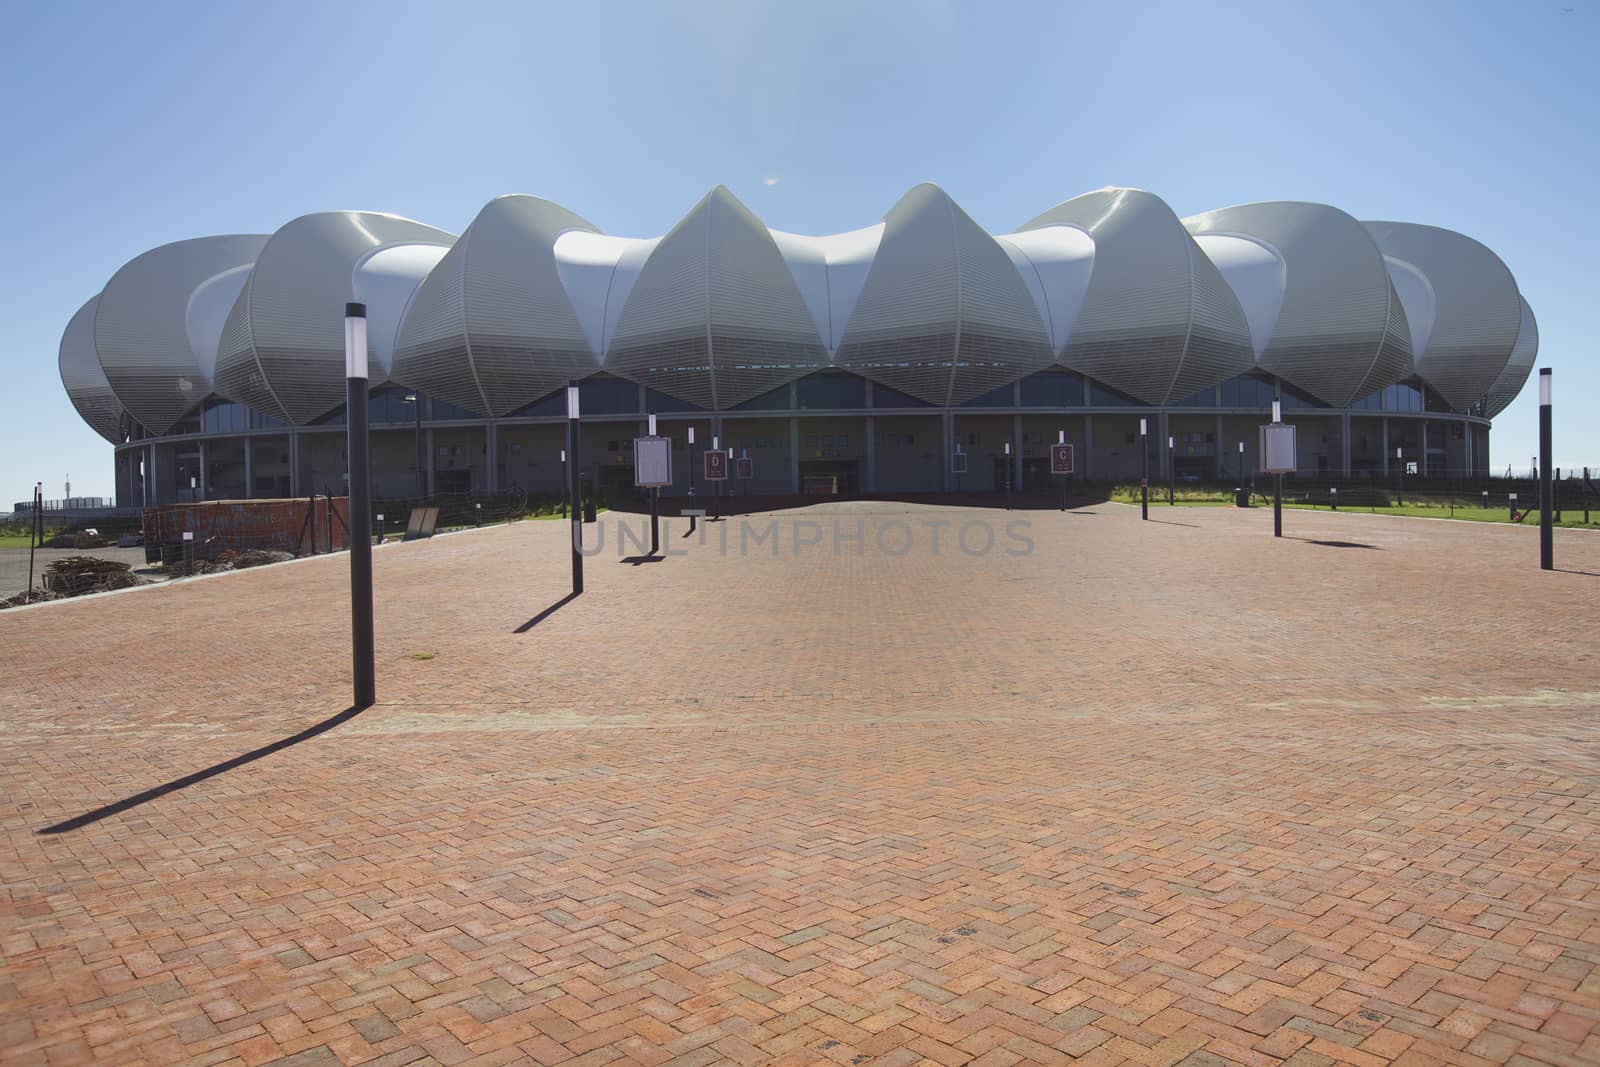 Stadium in Port Elizabeth, called Nelson Mandela, South Africa